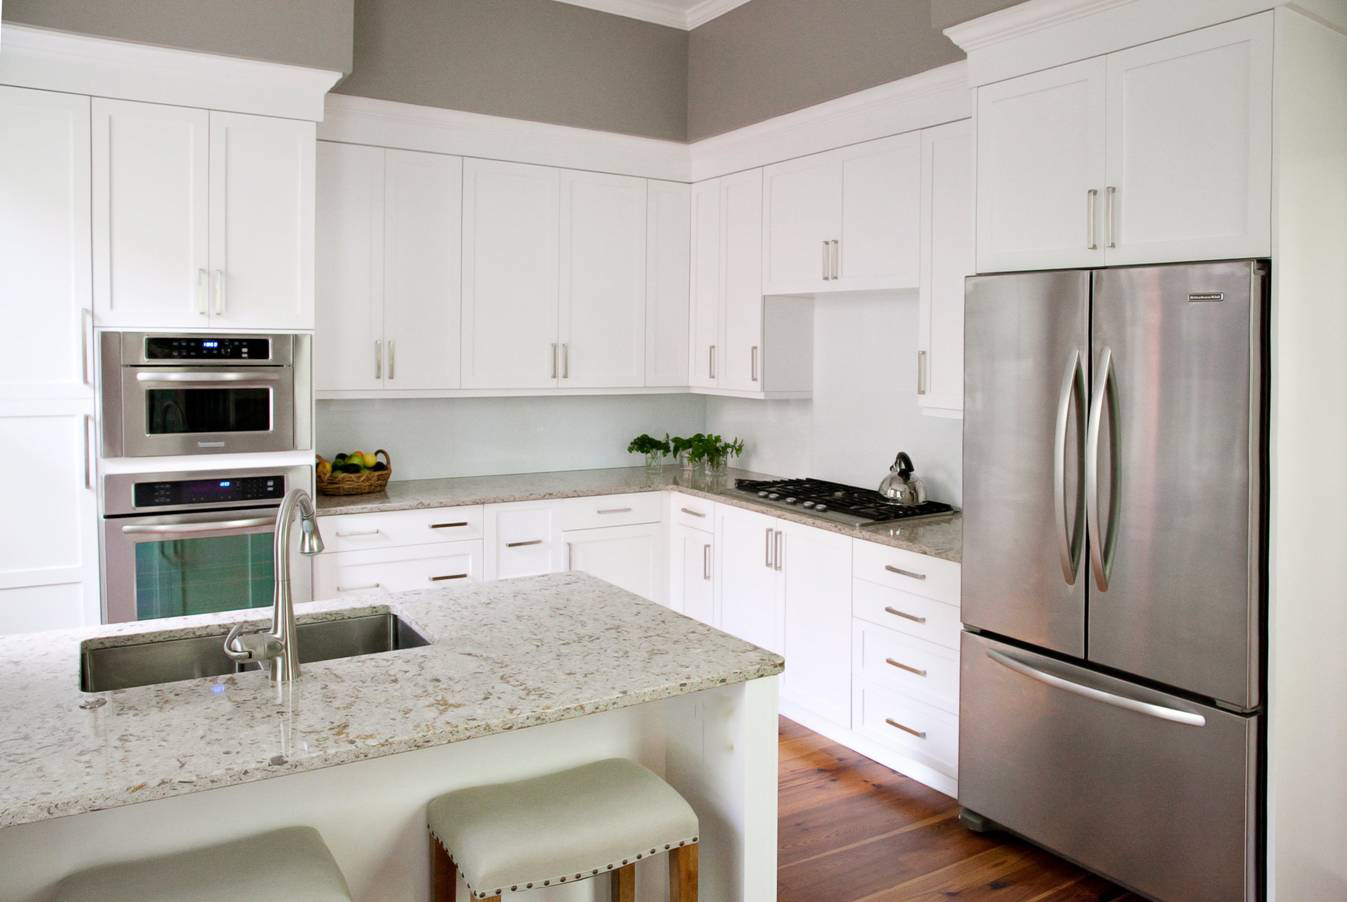 20 Dark Color Kitchen Cabinets - Design Ideas (PICTURES)